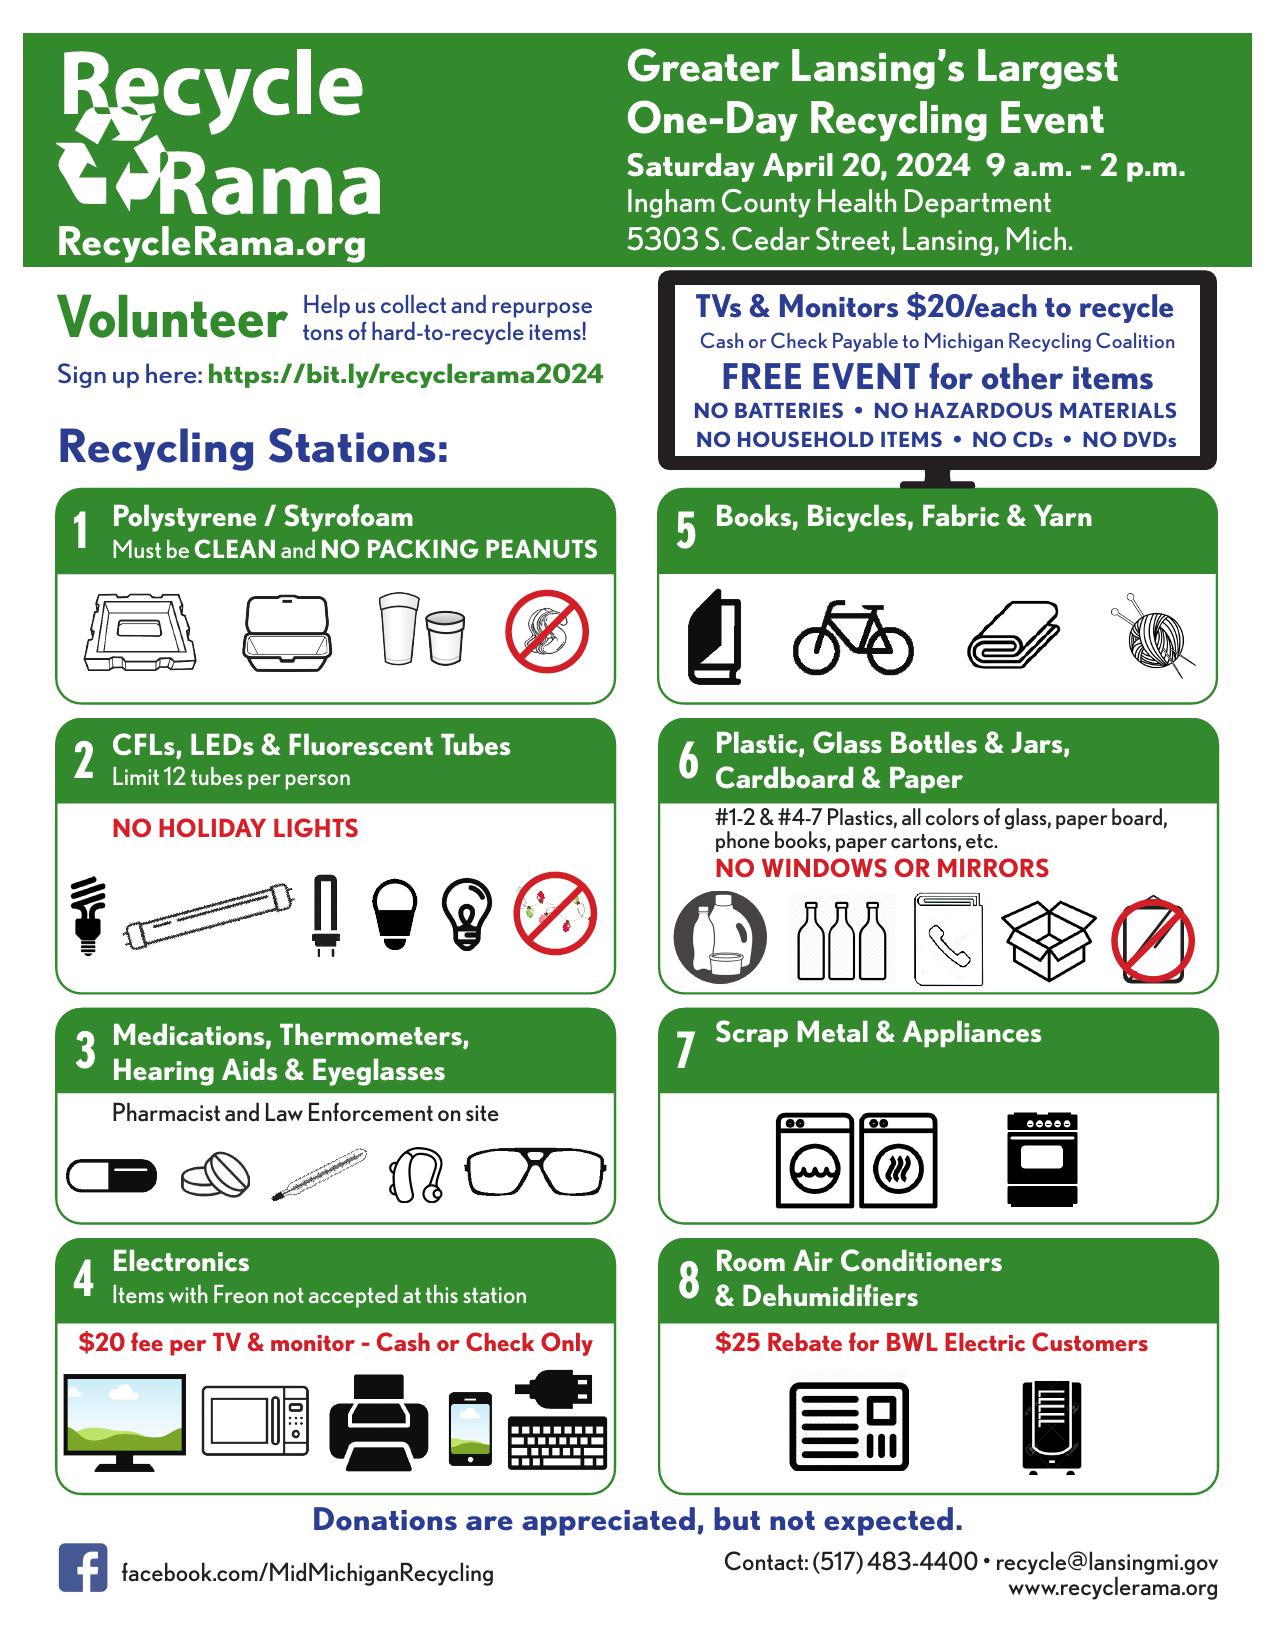 Recycle Rama Sustainability Michigan State University